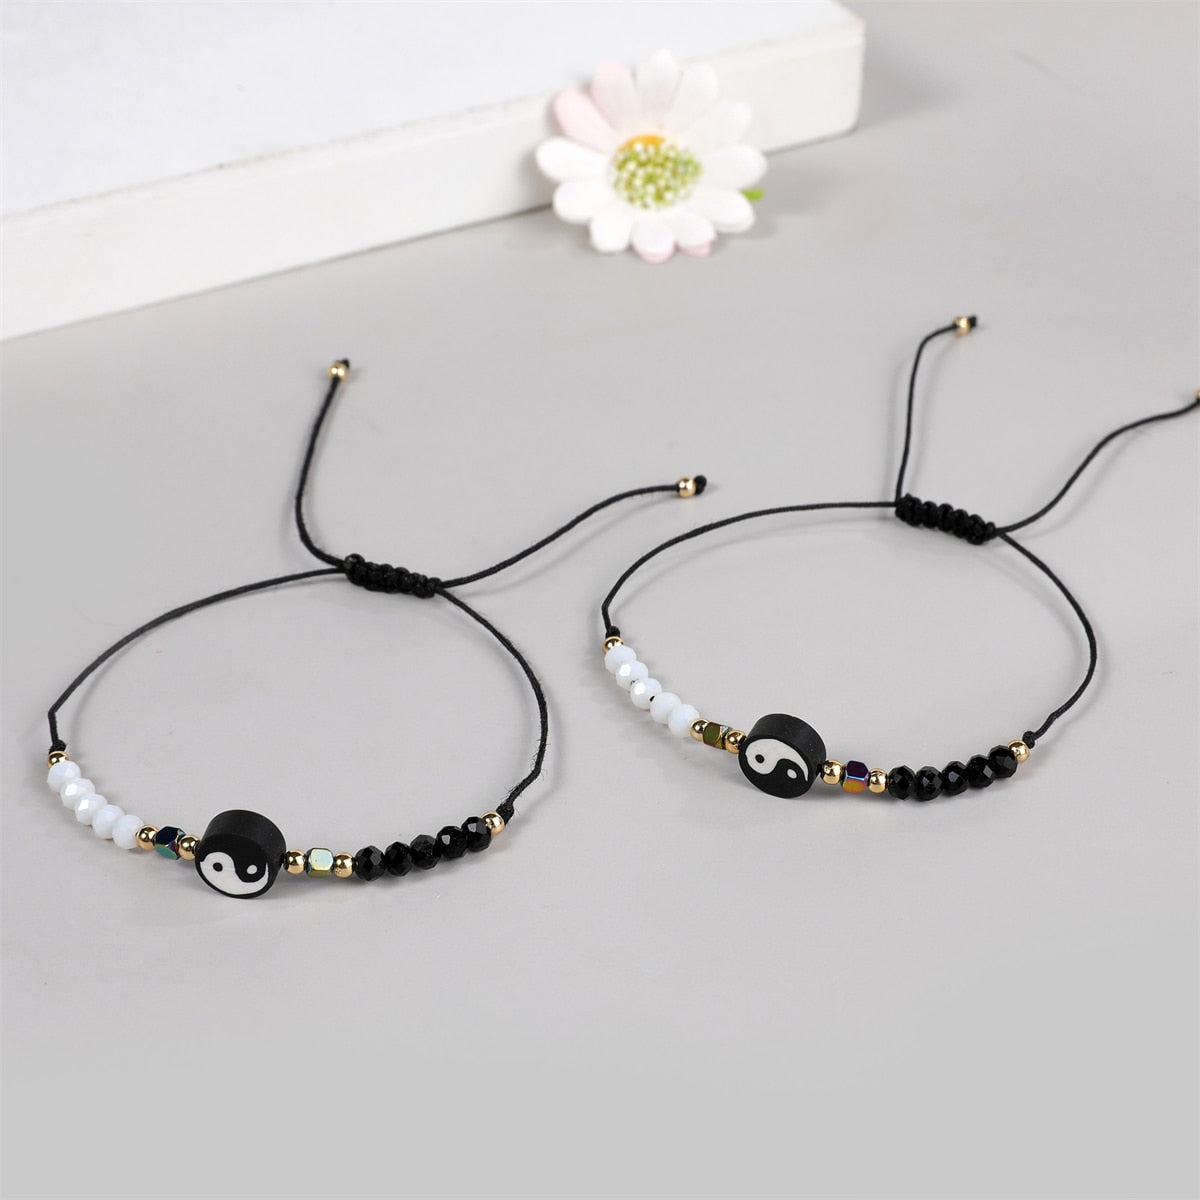 12pcs/lot Yin and Yang Tai Chi Clay Pendant Black/White Adjustable Wax Cord Beads Men Women Couple Bracelet Anklet Gift